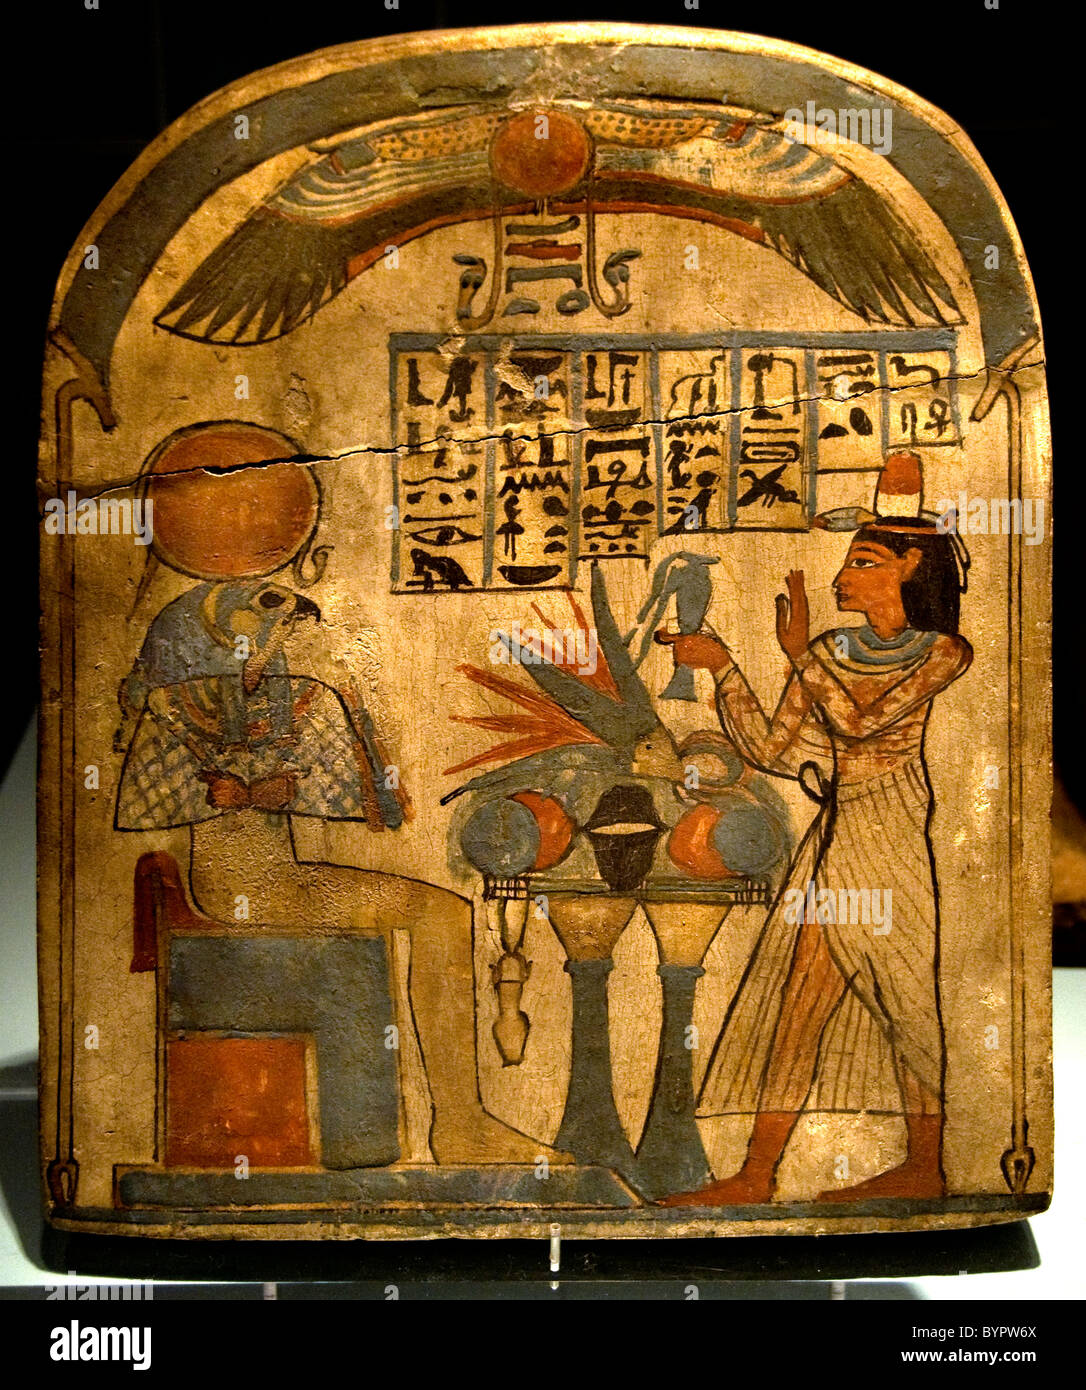 Museum Egypt Antiquity Pharaoh god goddess culture Stock Photo